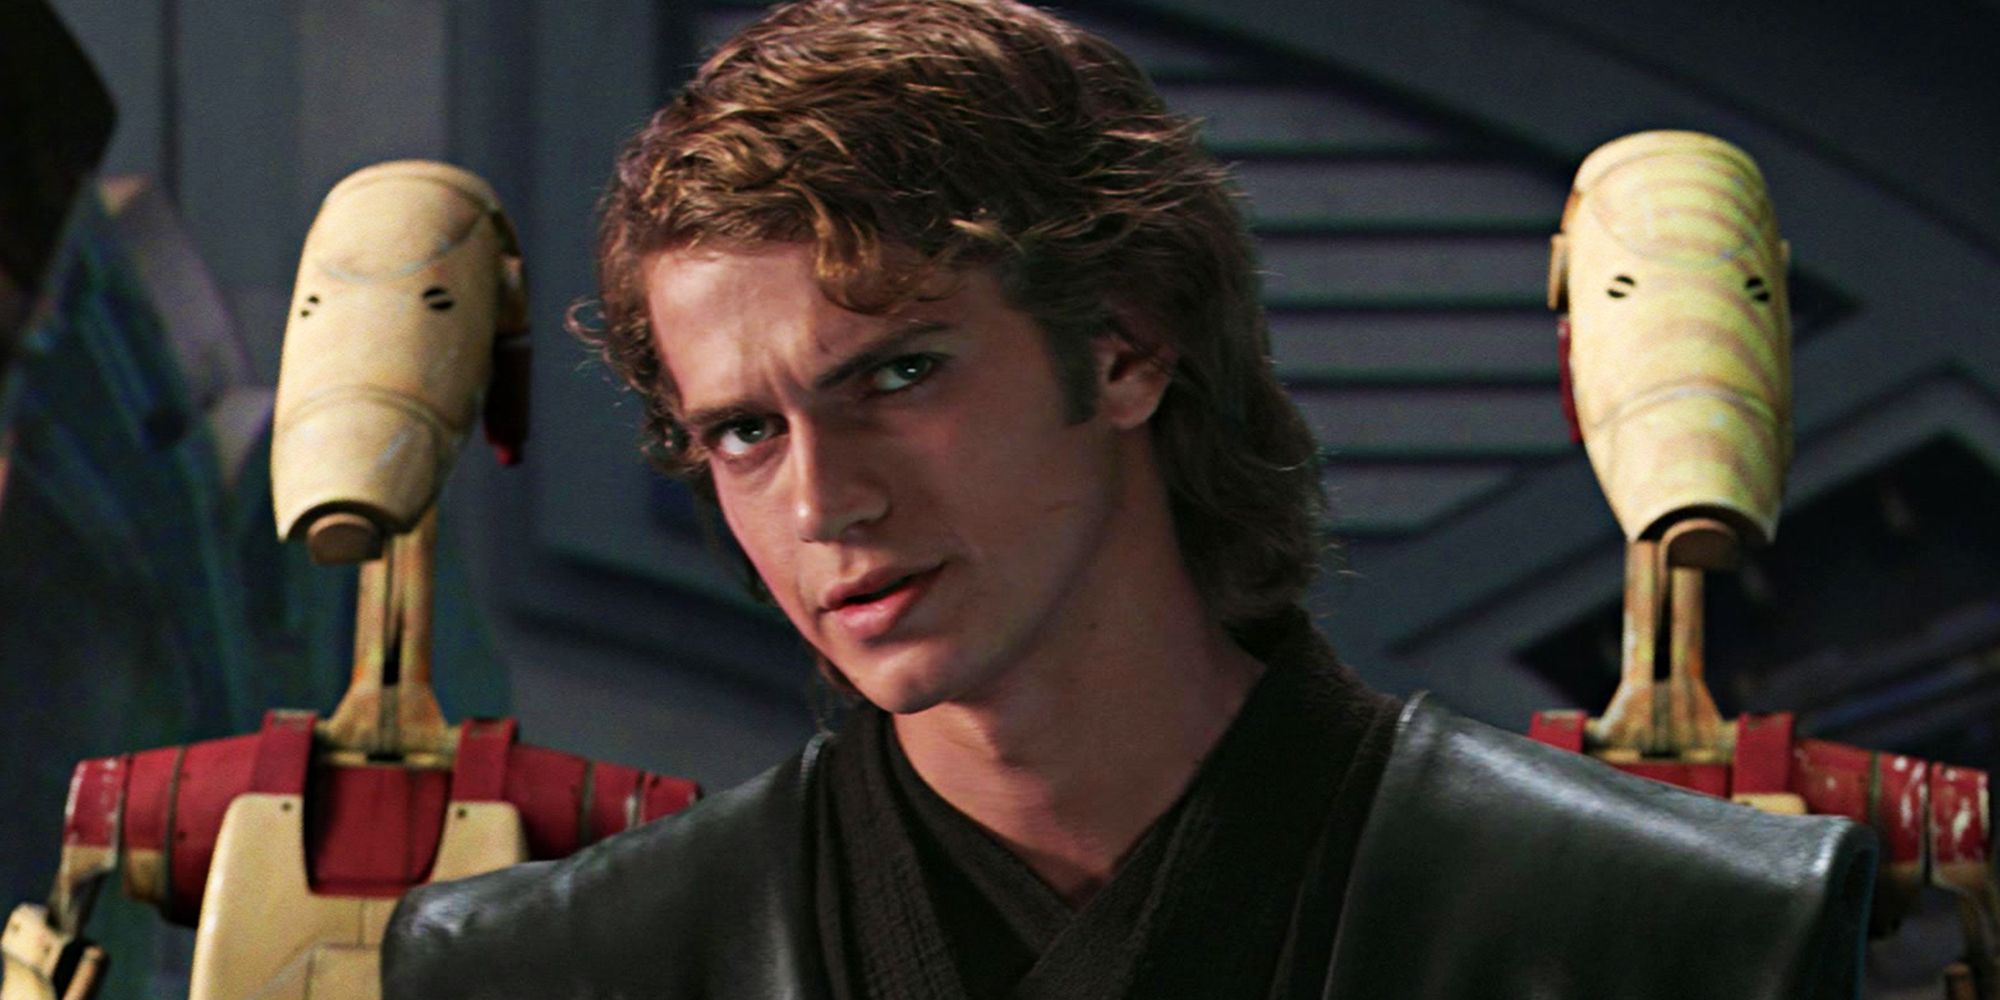 Hayden Christensen's Anakin Skywalker tells General Grievous he's shorter than he expected in Revenge of the Sith